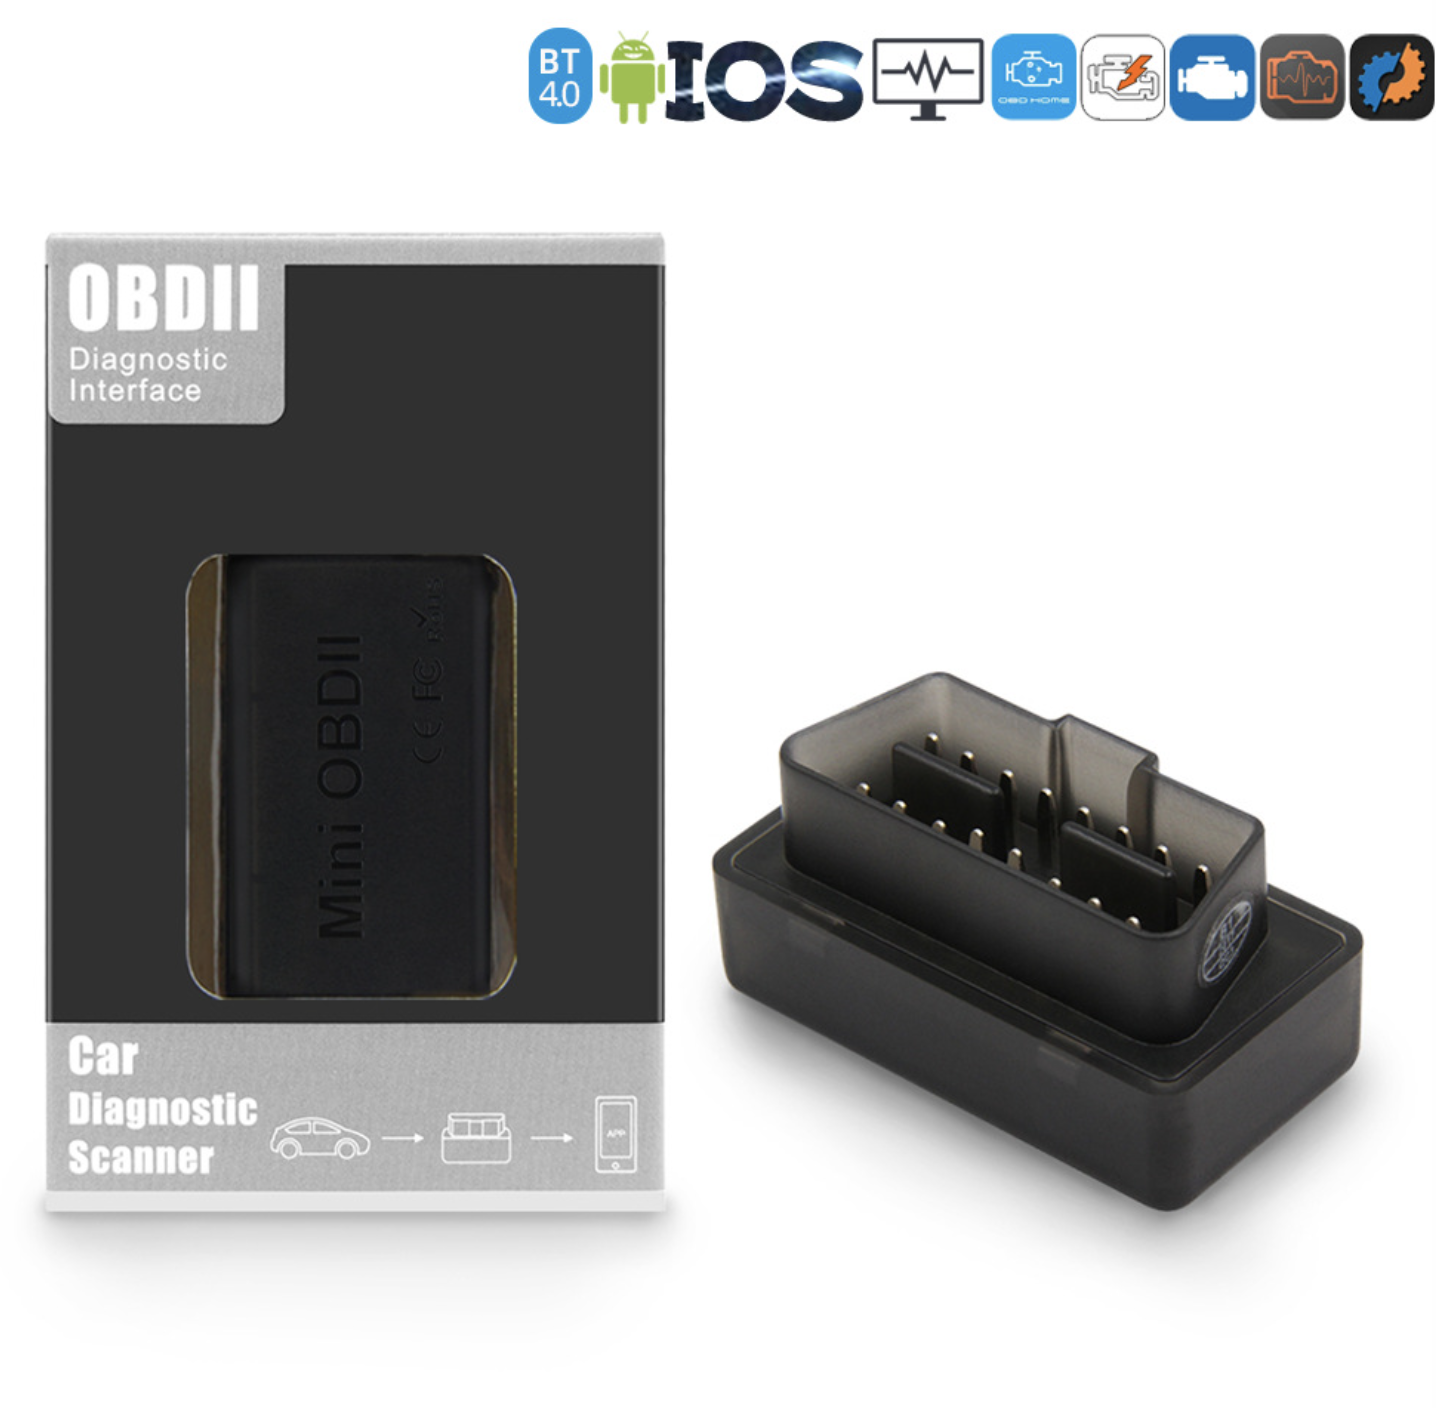 Mini Otomatik OBD Tarayıcı ELM327 Bluetooth 4.0 OBD2 OBDII Araba Teşhis Tespit Aracı Arıza IOS Android için Enstrüman Algıla